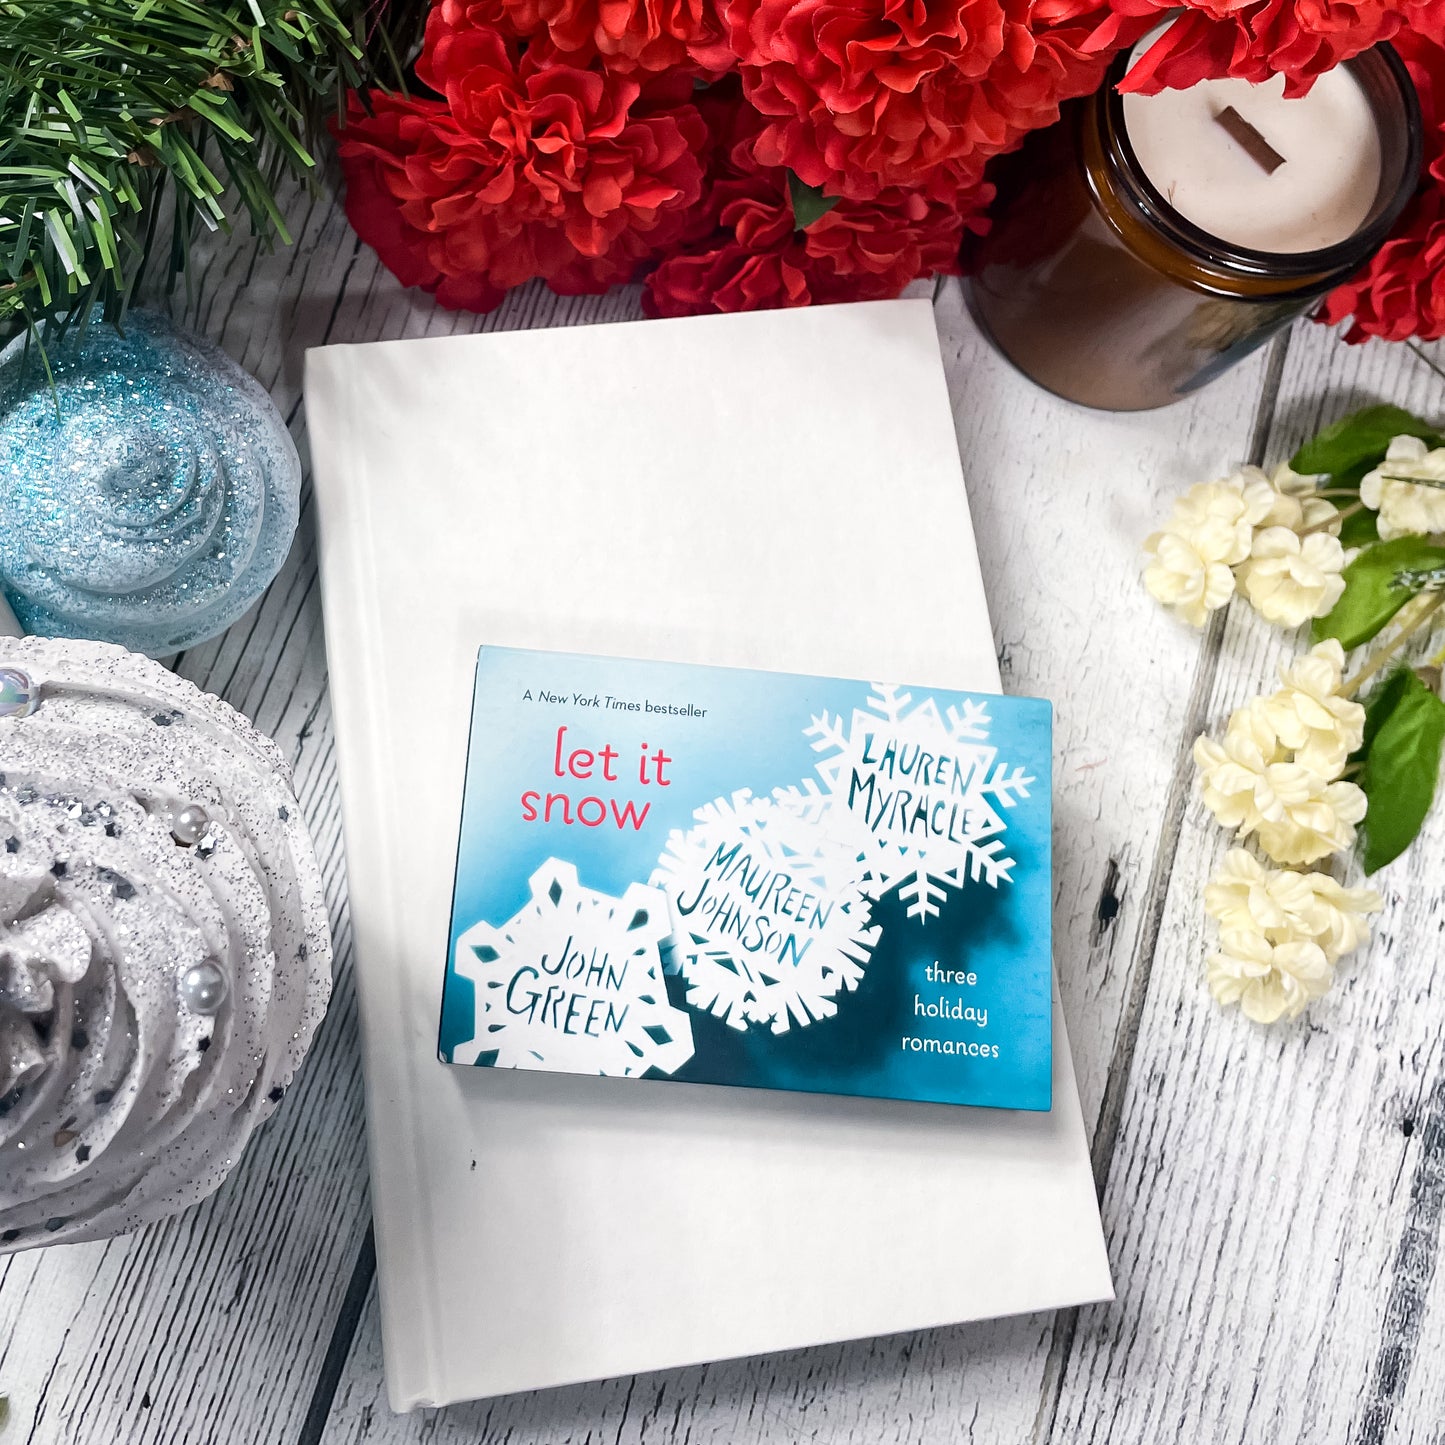 Let it Snow: Three Holiday Romances (Penguin Mini) by John Green, Maureen Johnson, and Lauren Myracle